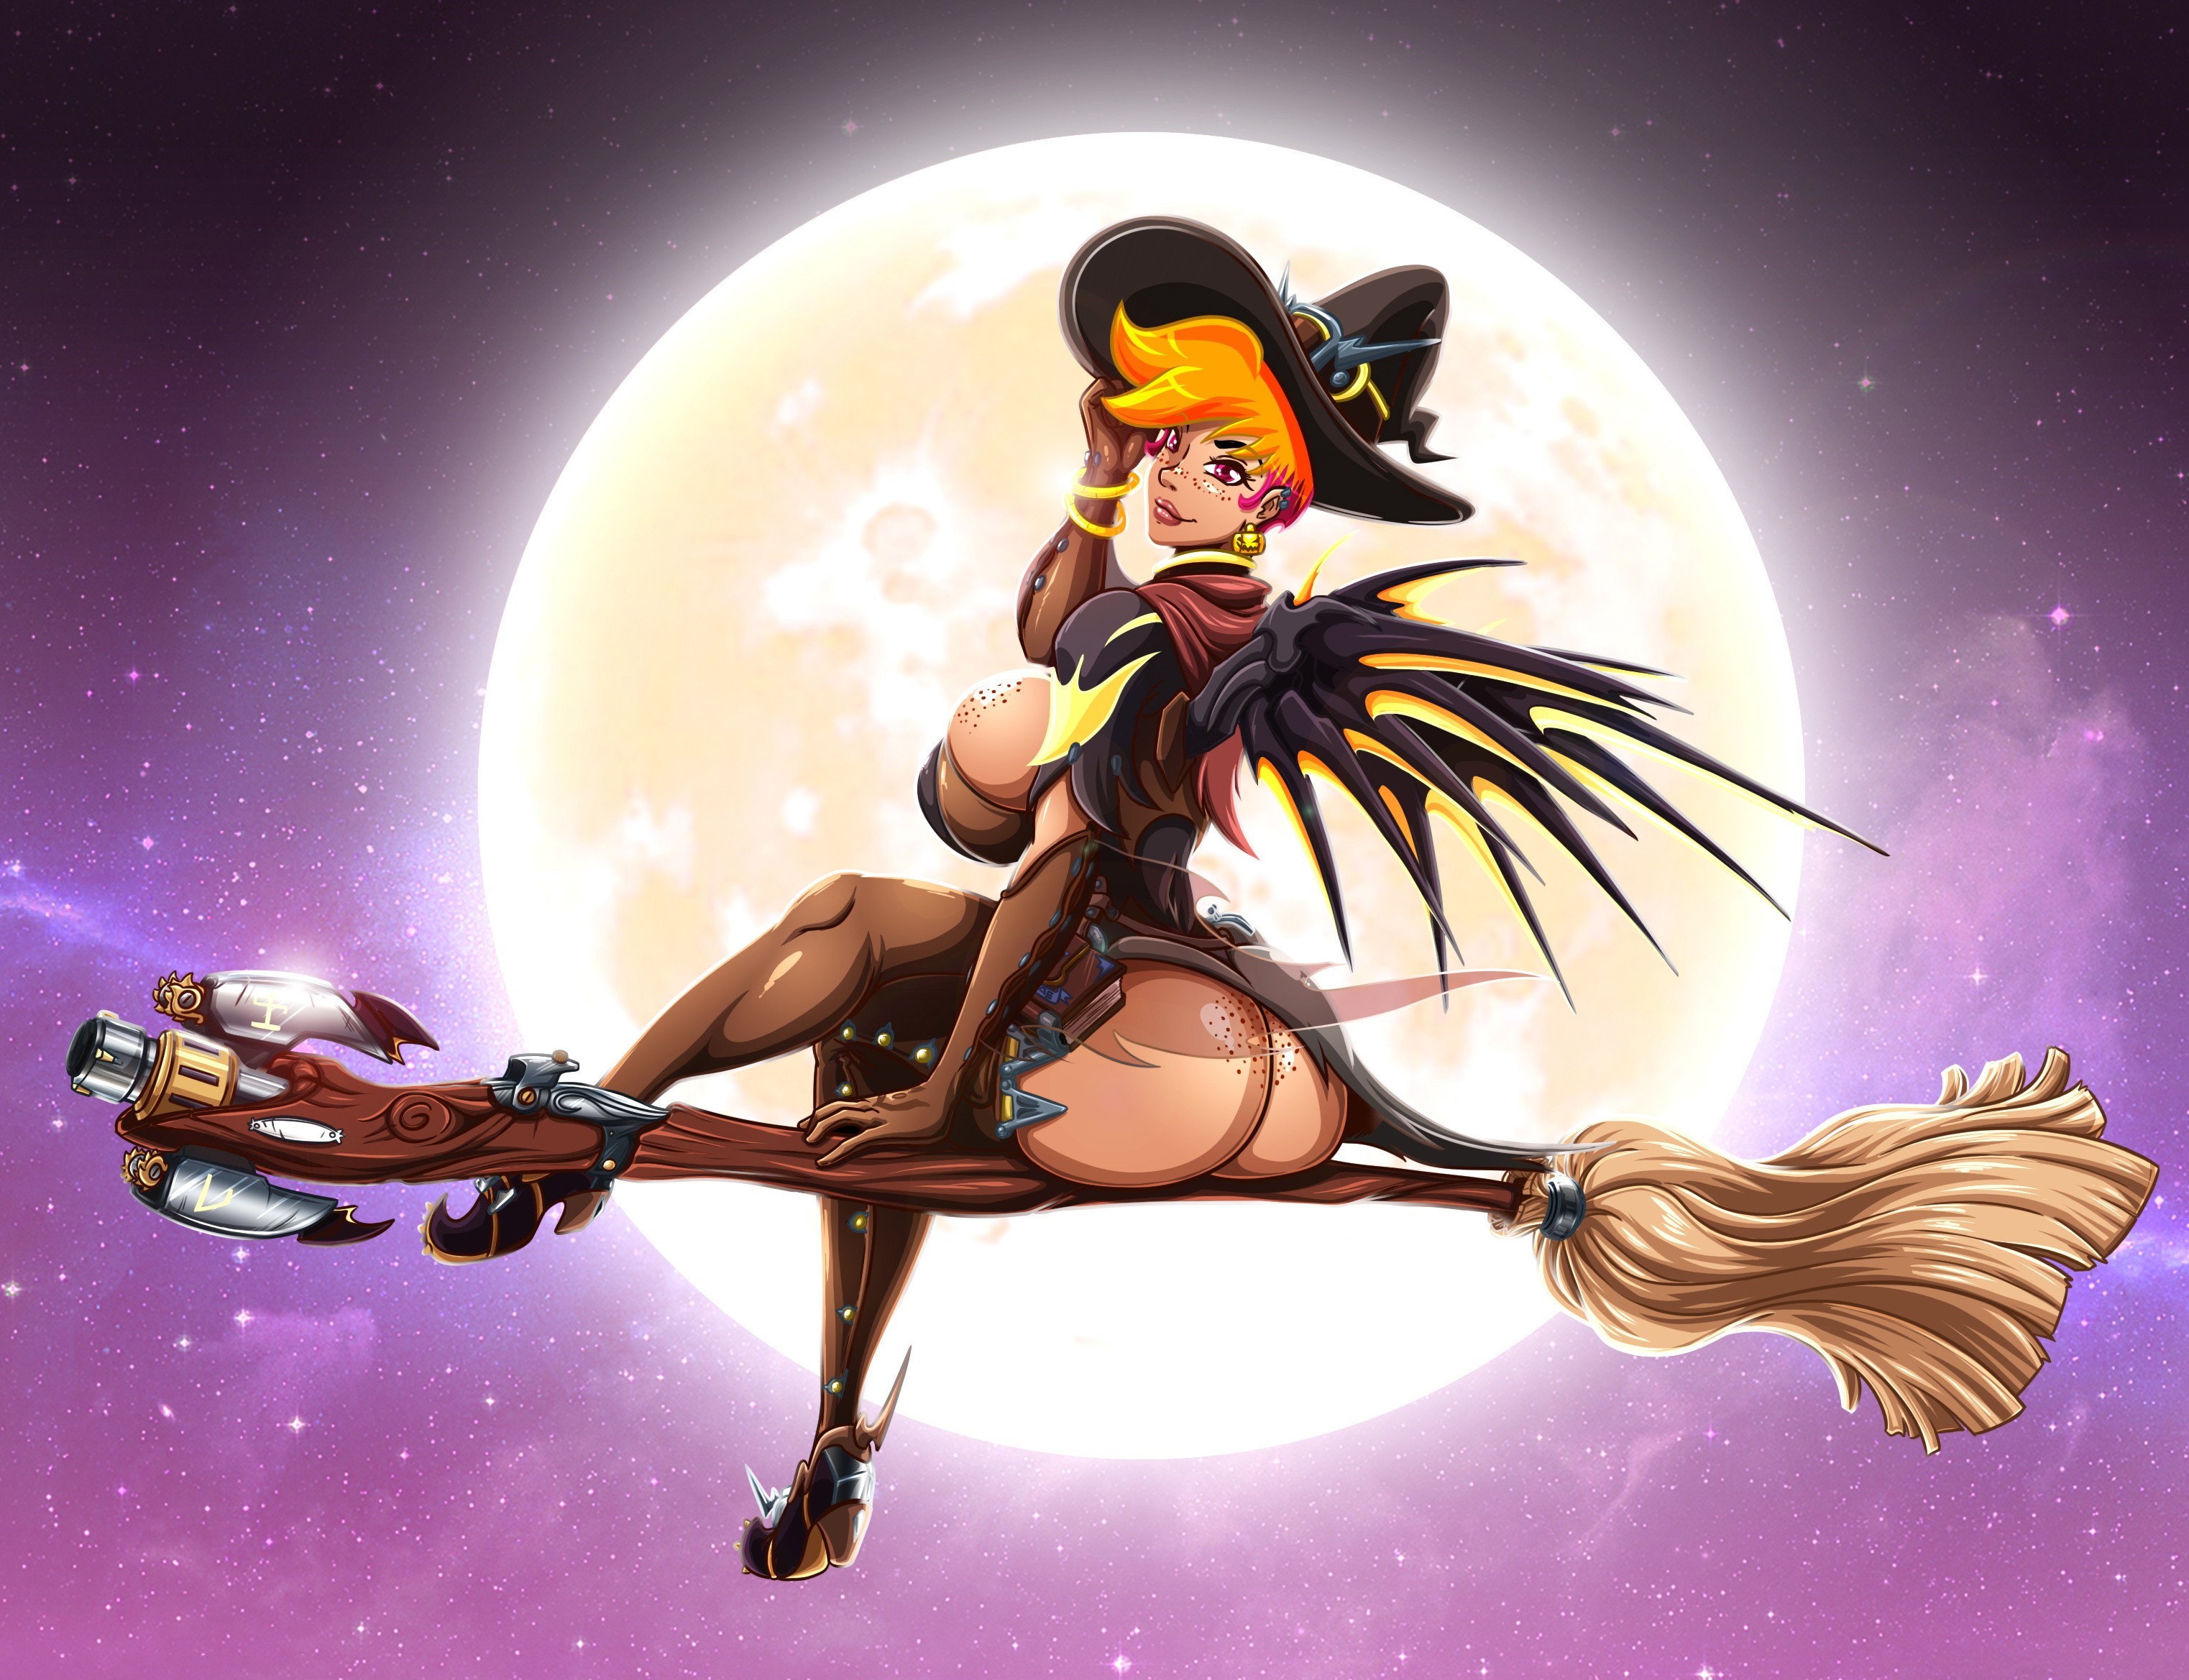 General 3045x2337 witch ass big boobs Moon fantasy girl broom digital art